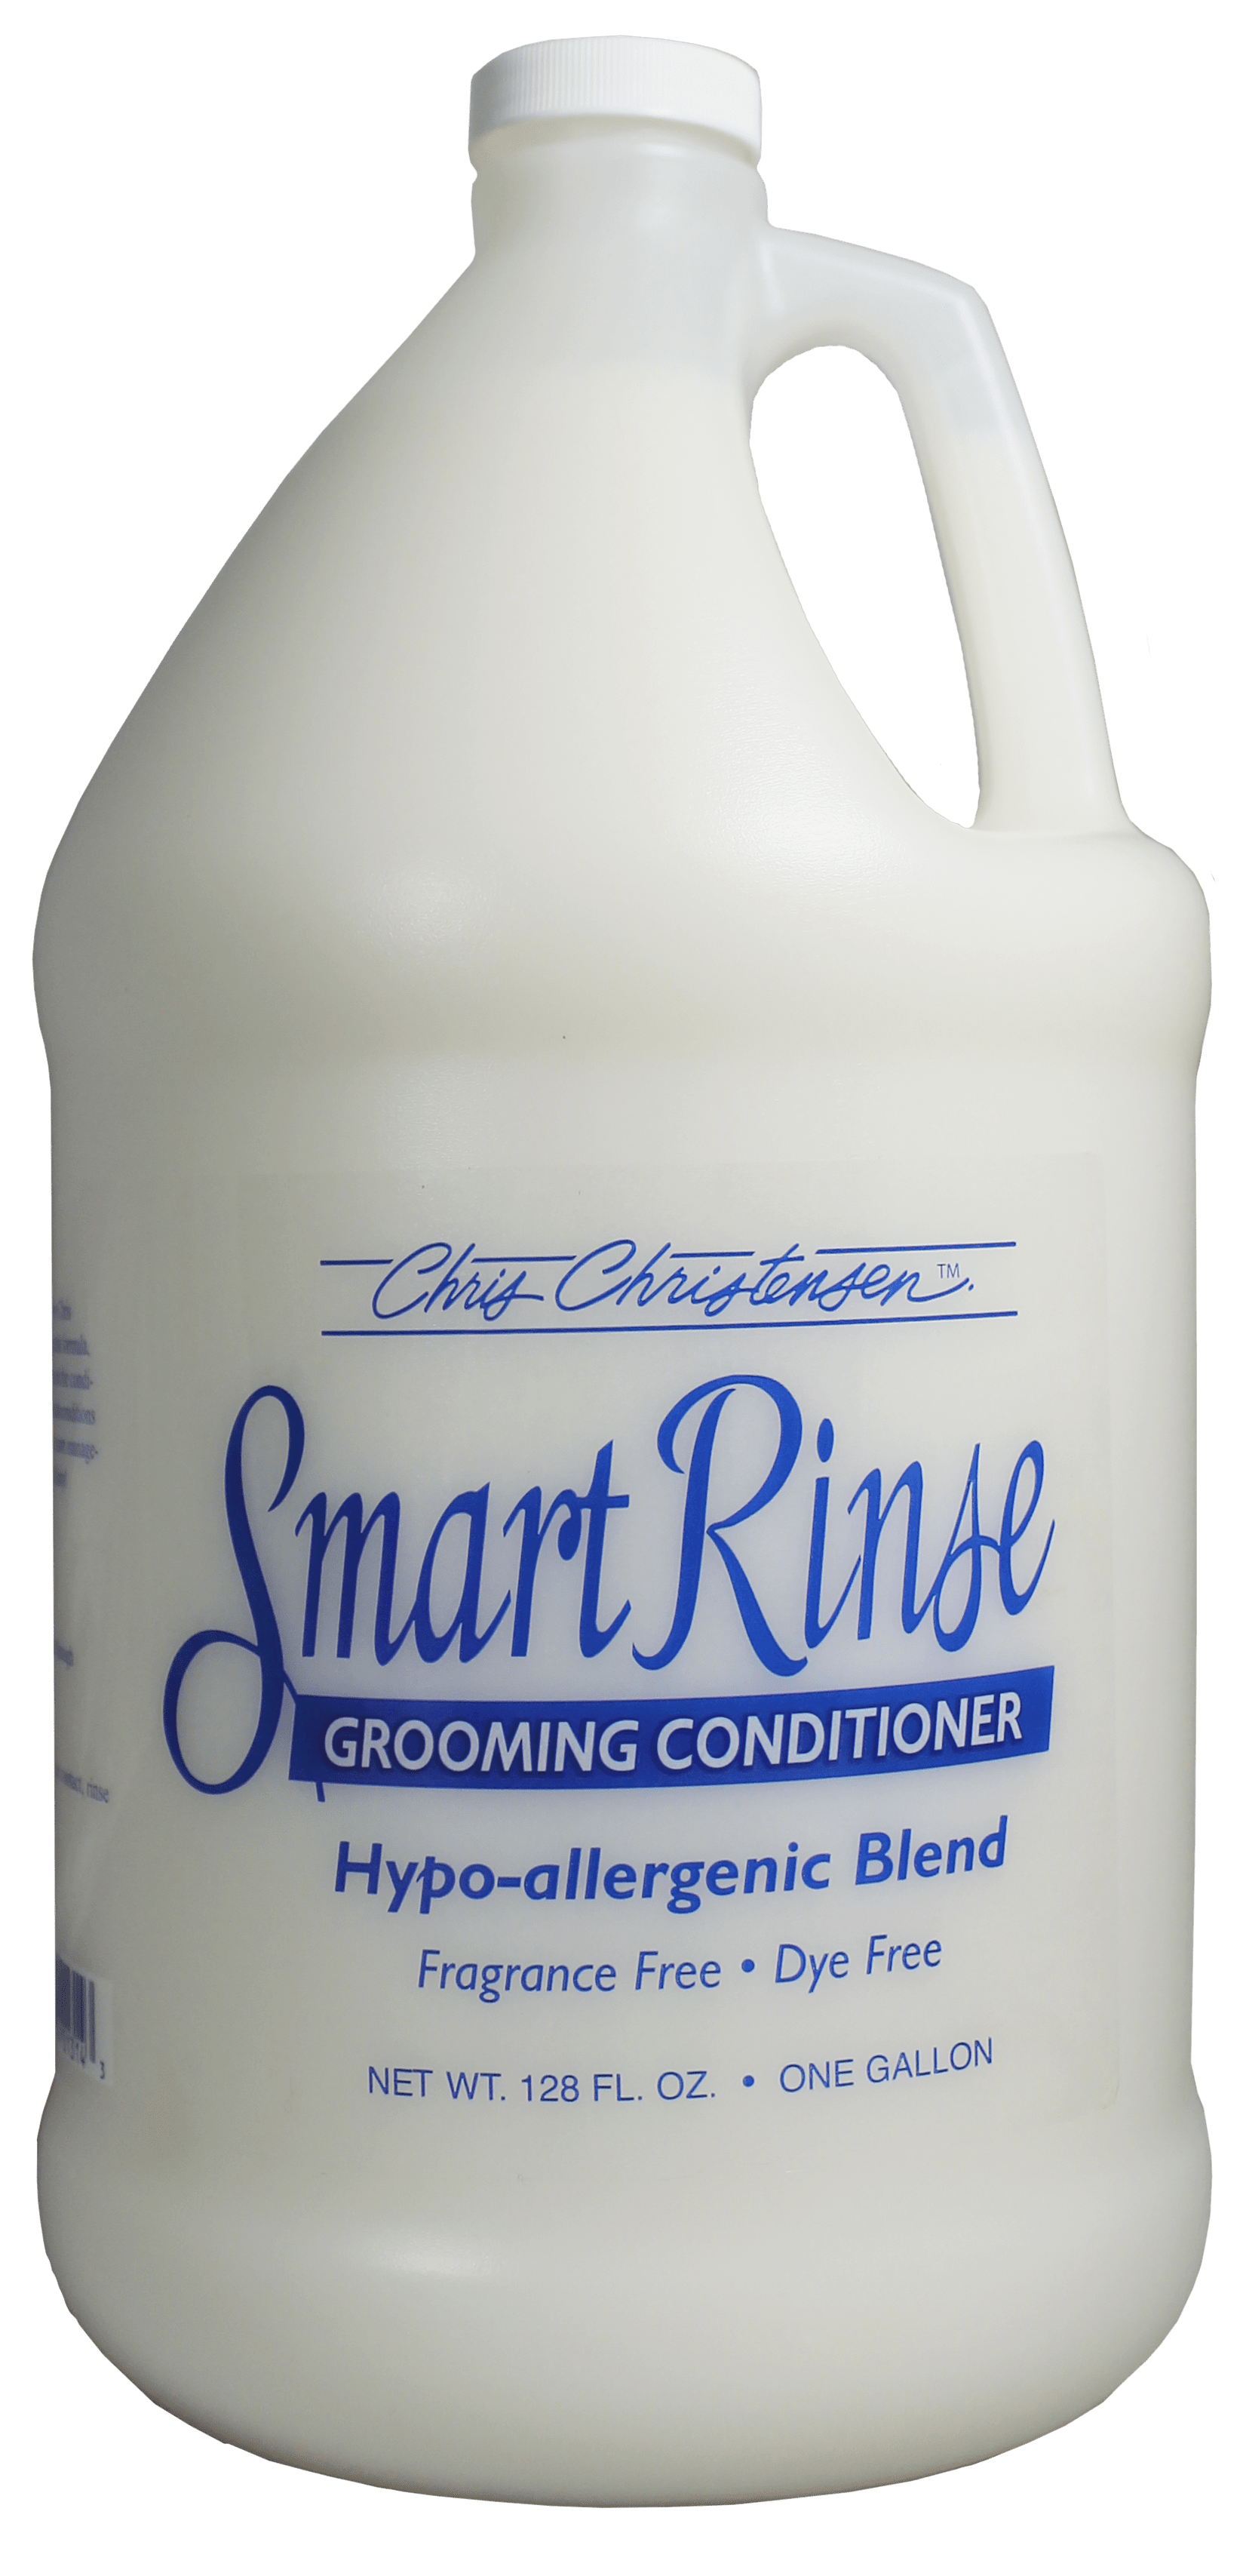 CC - Smart Rinse Hypo-allergenic Blend